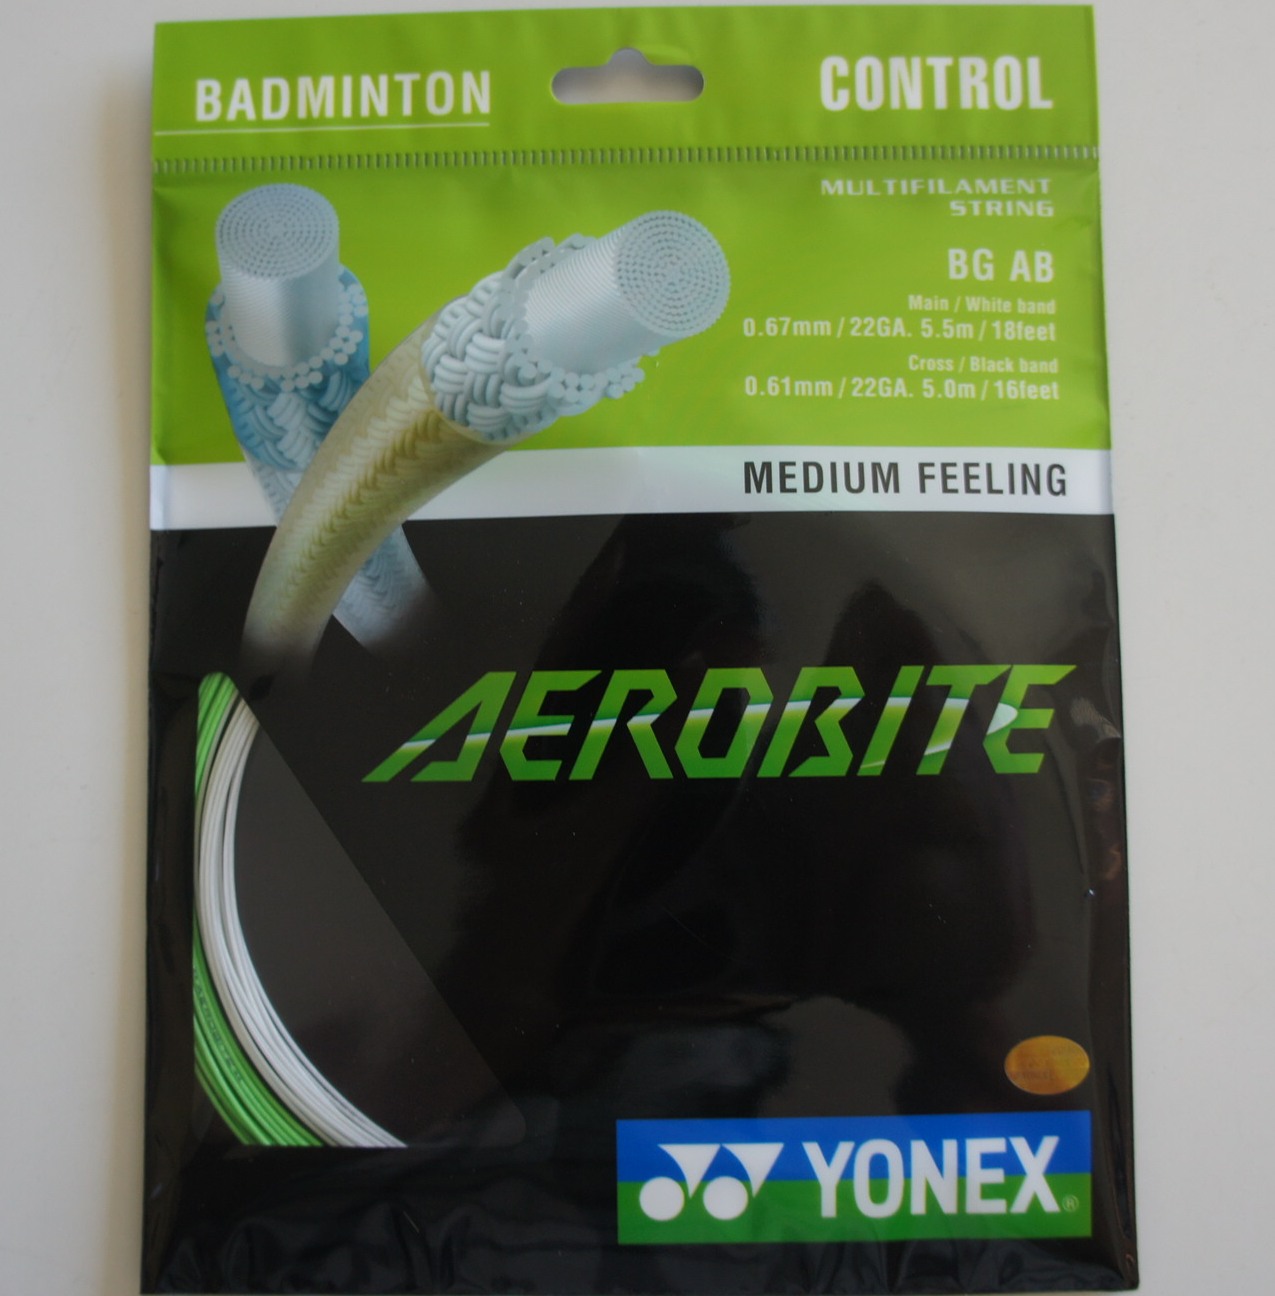 YONEX BG AB Aerobite Badminton String (2 Packs), Green/White